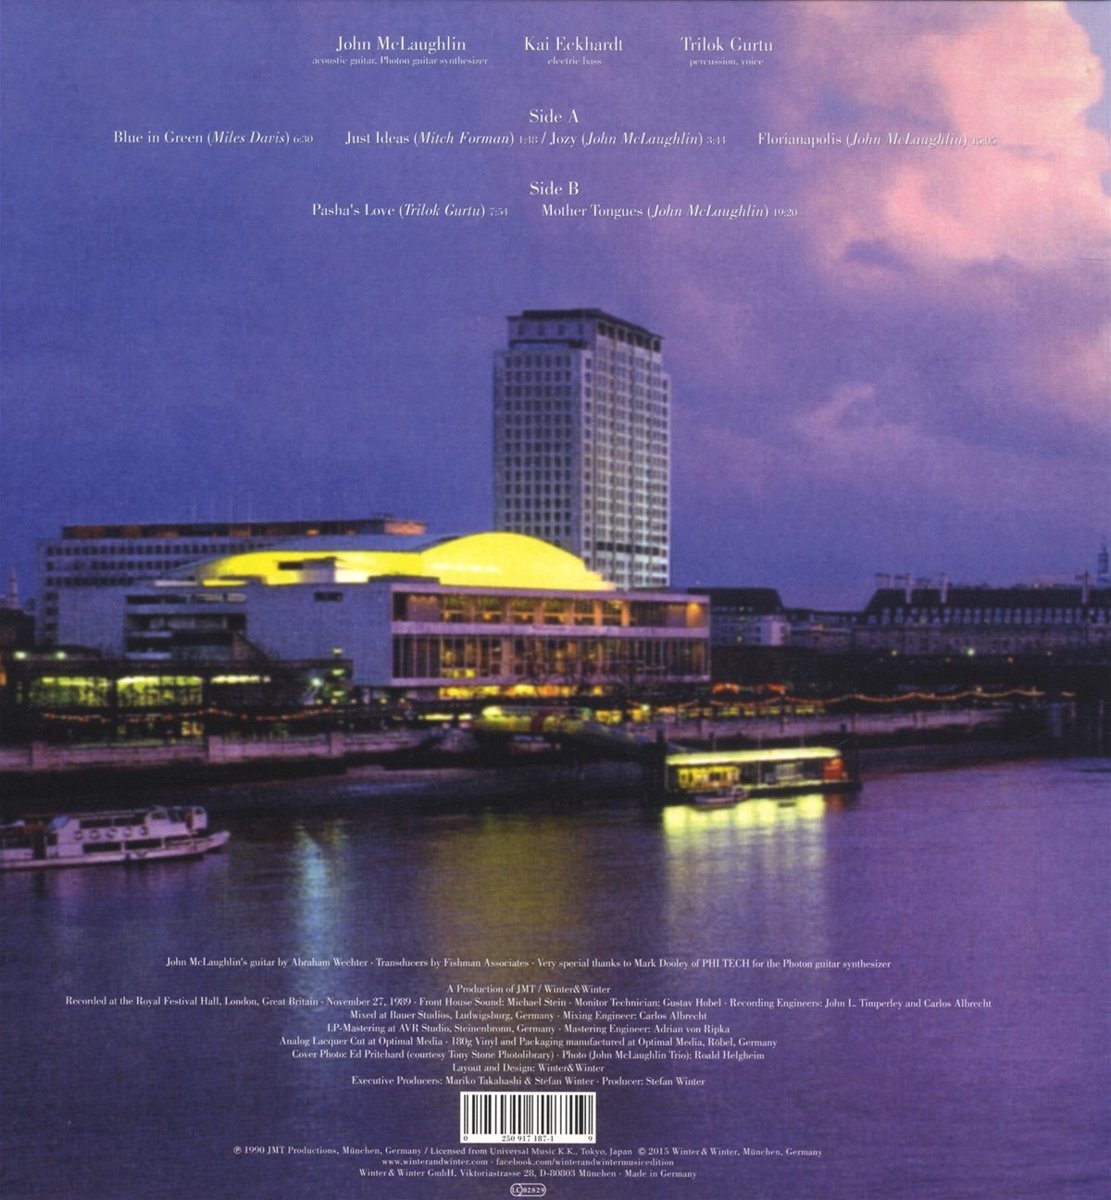 John McLaughlin Trio (존 맥러플린 트리오) - Live At The Royal Festival Hall, London [LP]